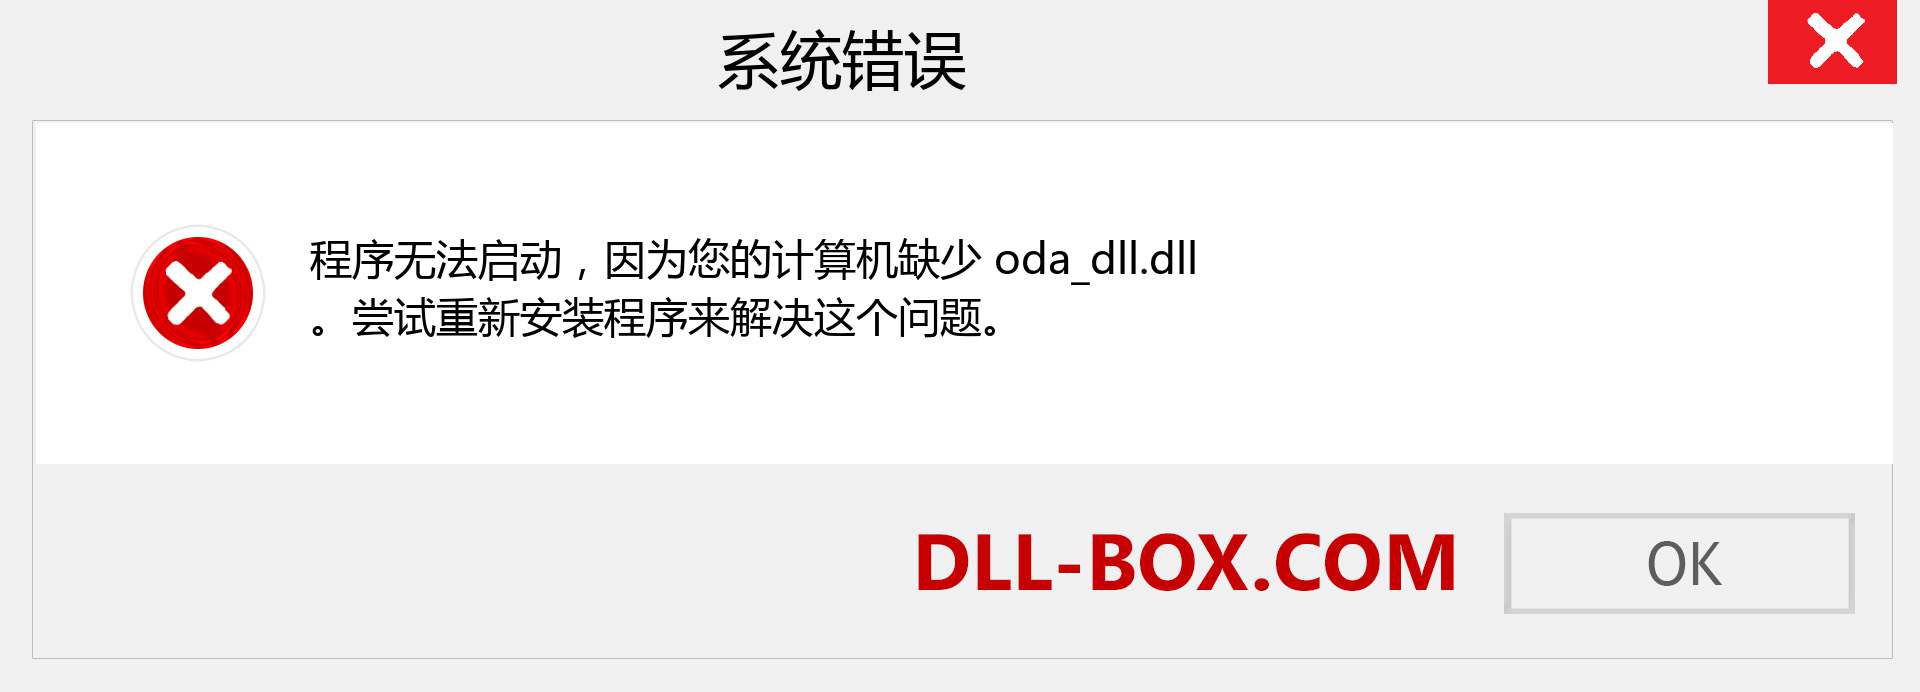 oda_dll.dll 文件丢失？。 适用于 Windows 7、8、10 的下载 - 修复 Windows、照片、图像上的 oda_dll dll 丢失错误